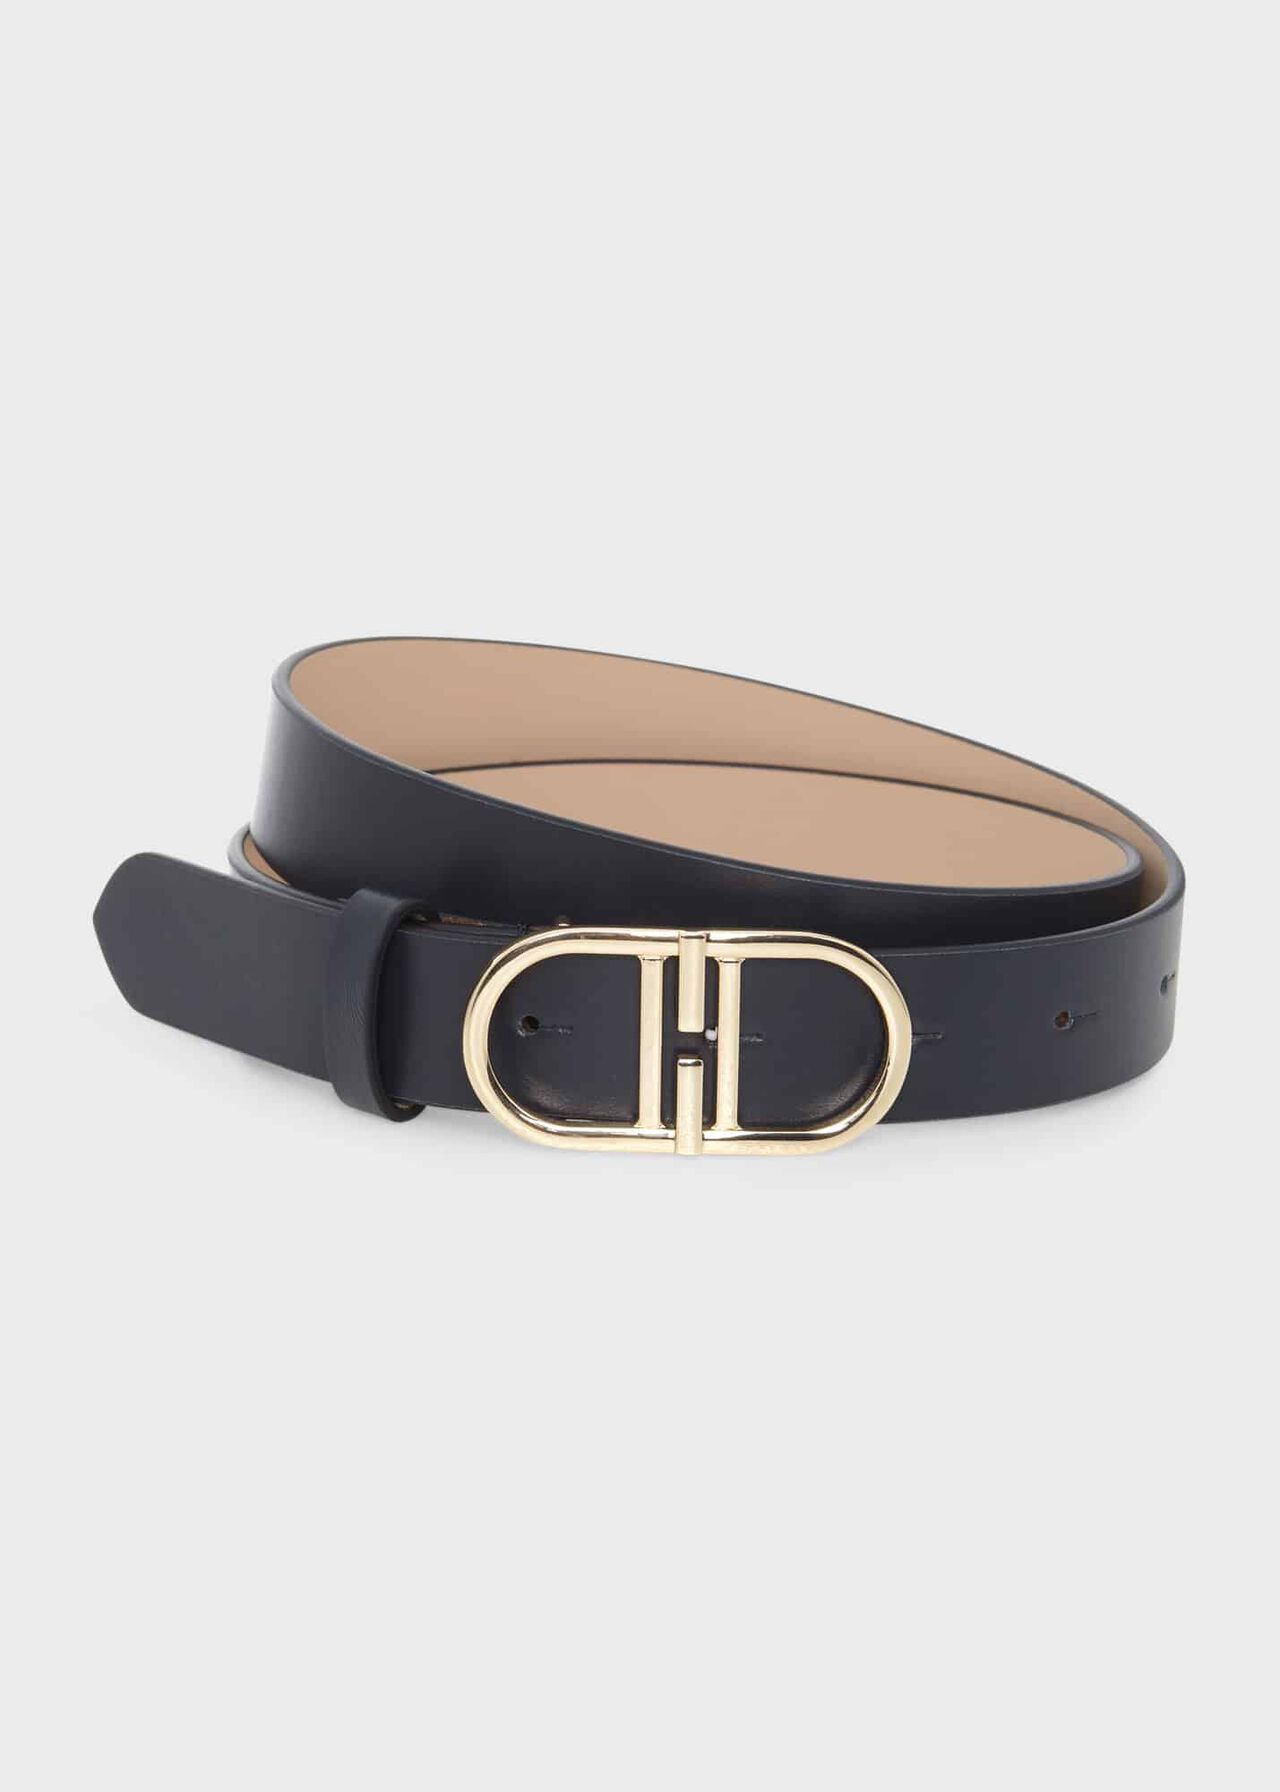 Kiera Leather Belt, Navy, hi-res